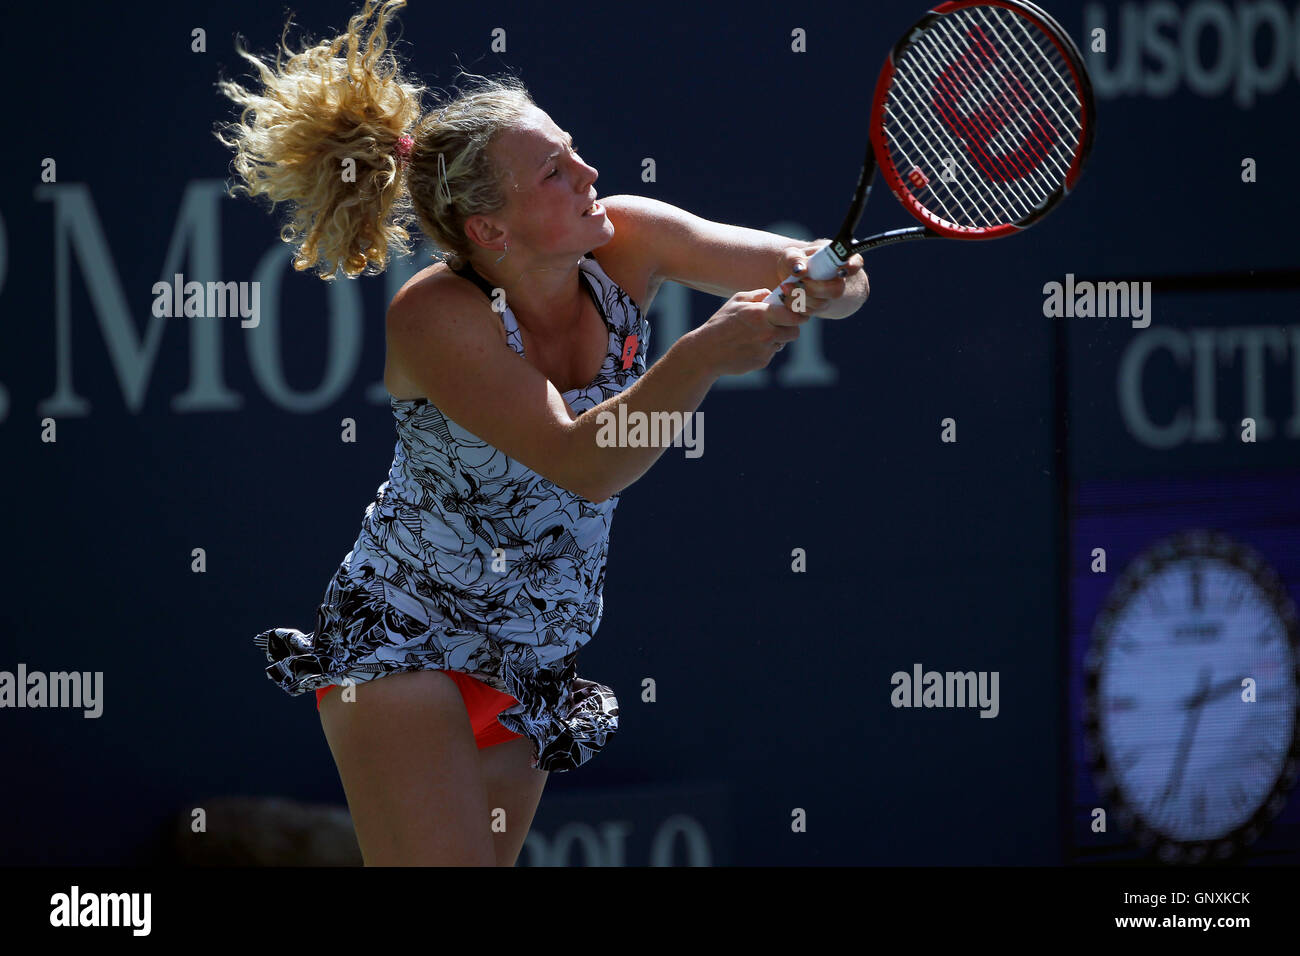 Katerina siniakova tennis action hi-res stock photography and images - Alamy